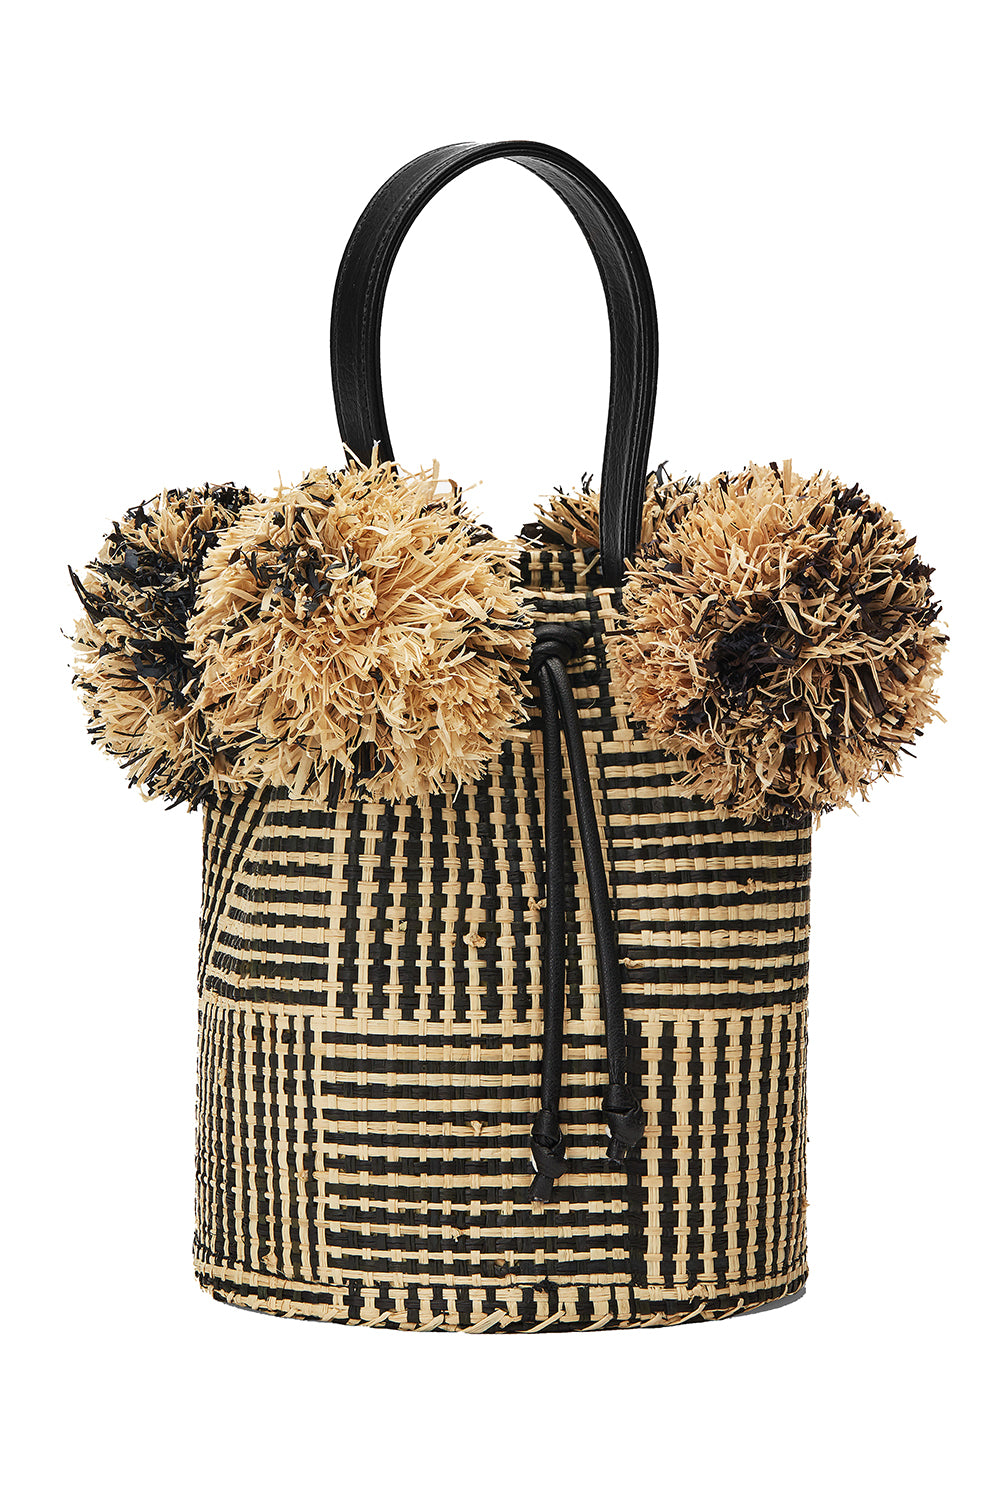 Timeless Handmade Boho Chic Shell Rattan Bag Basket